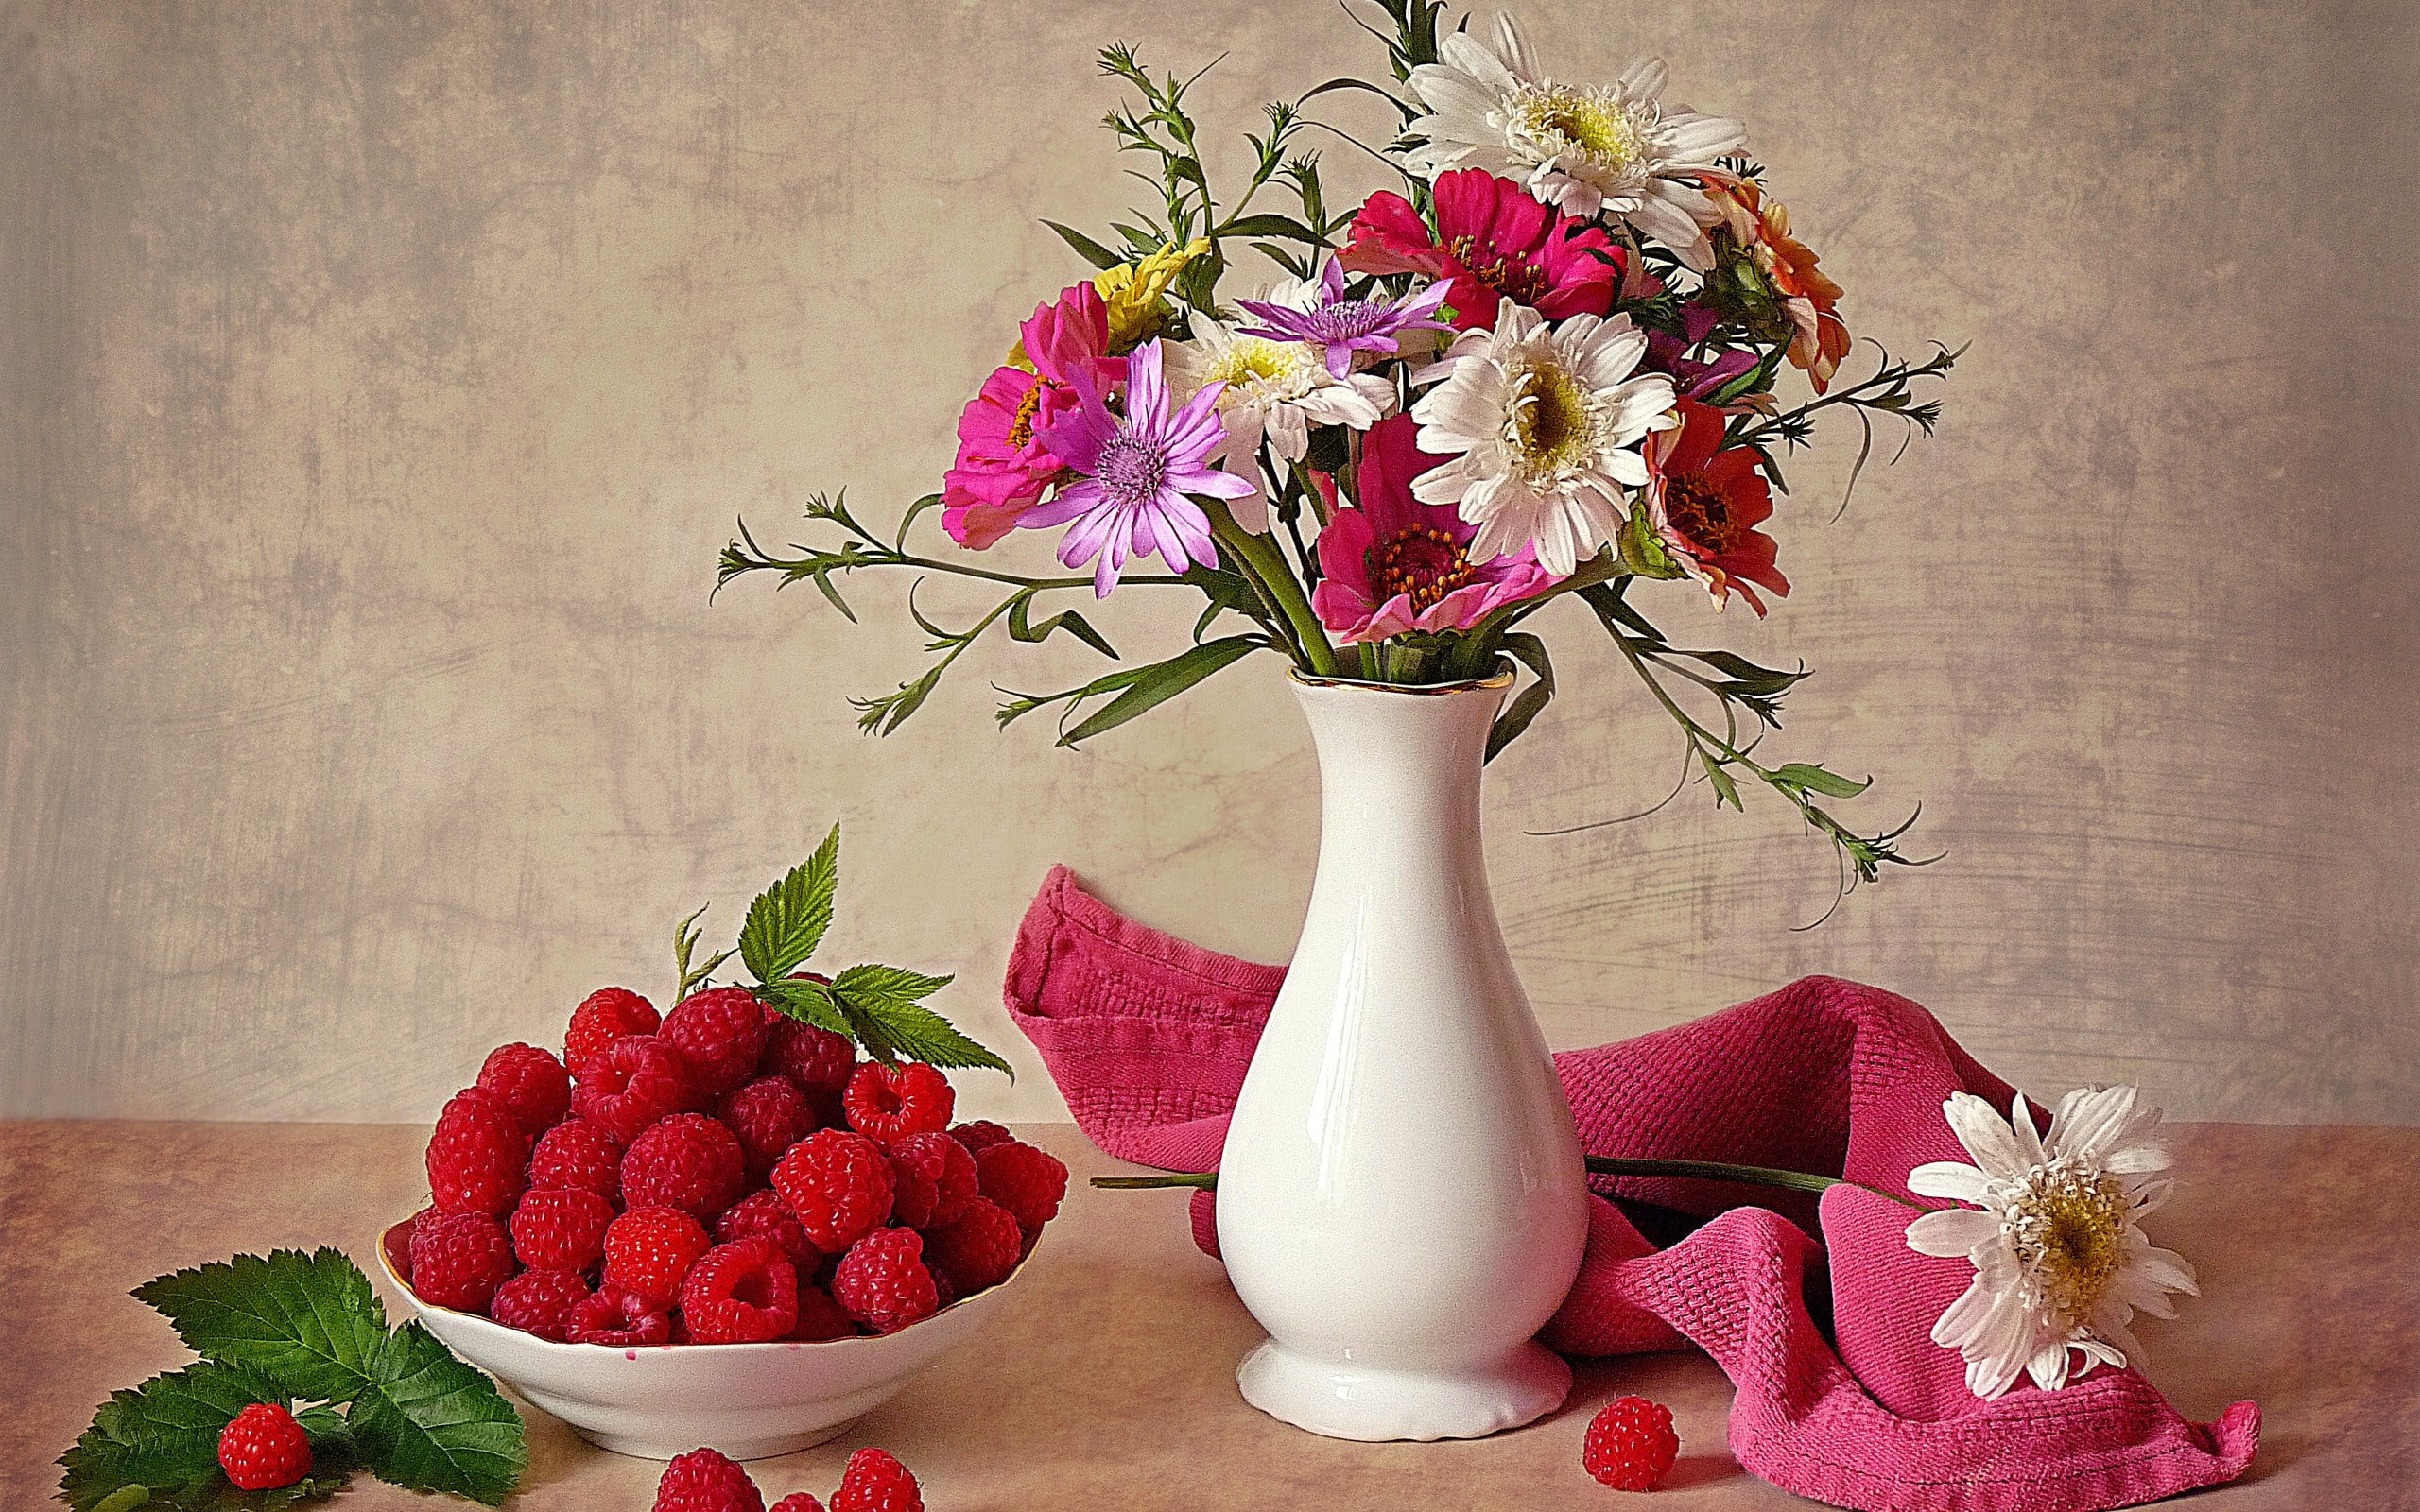 white ceramic vase with flowers beside strawberry fruits